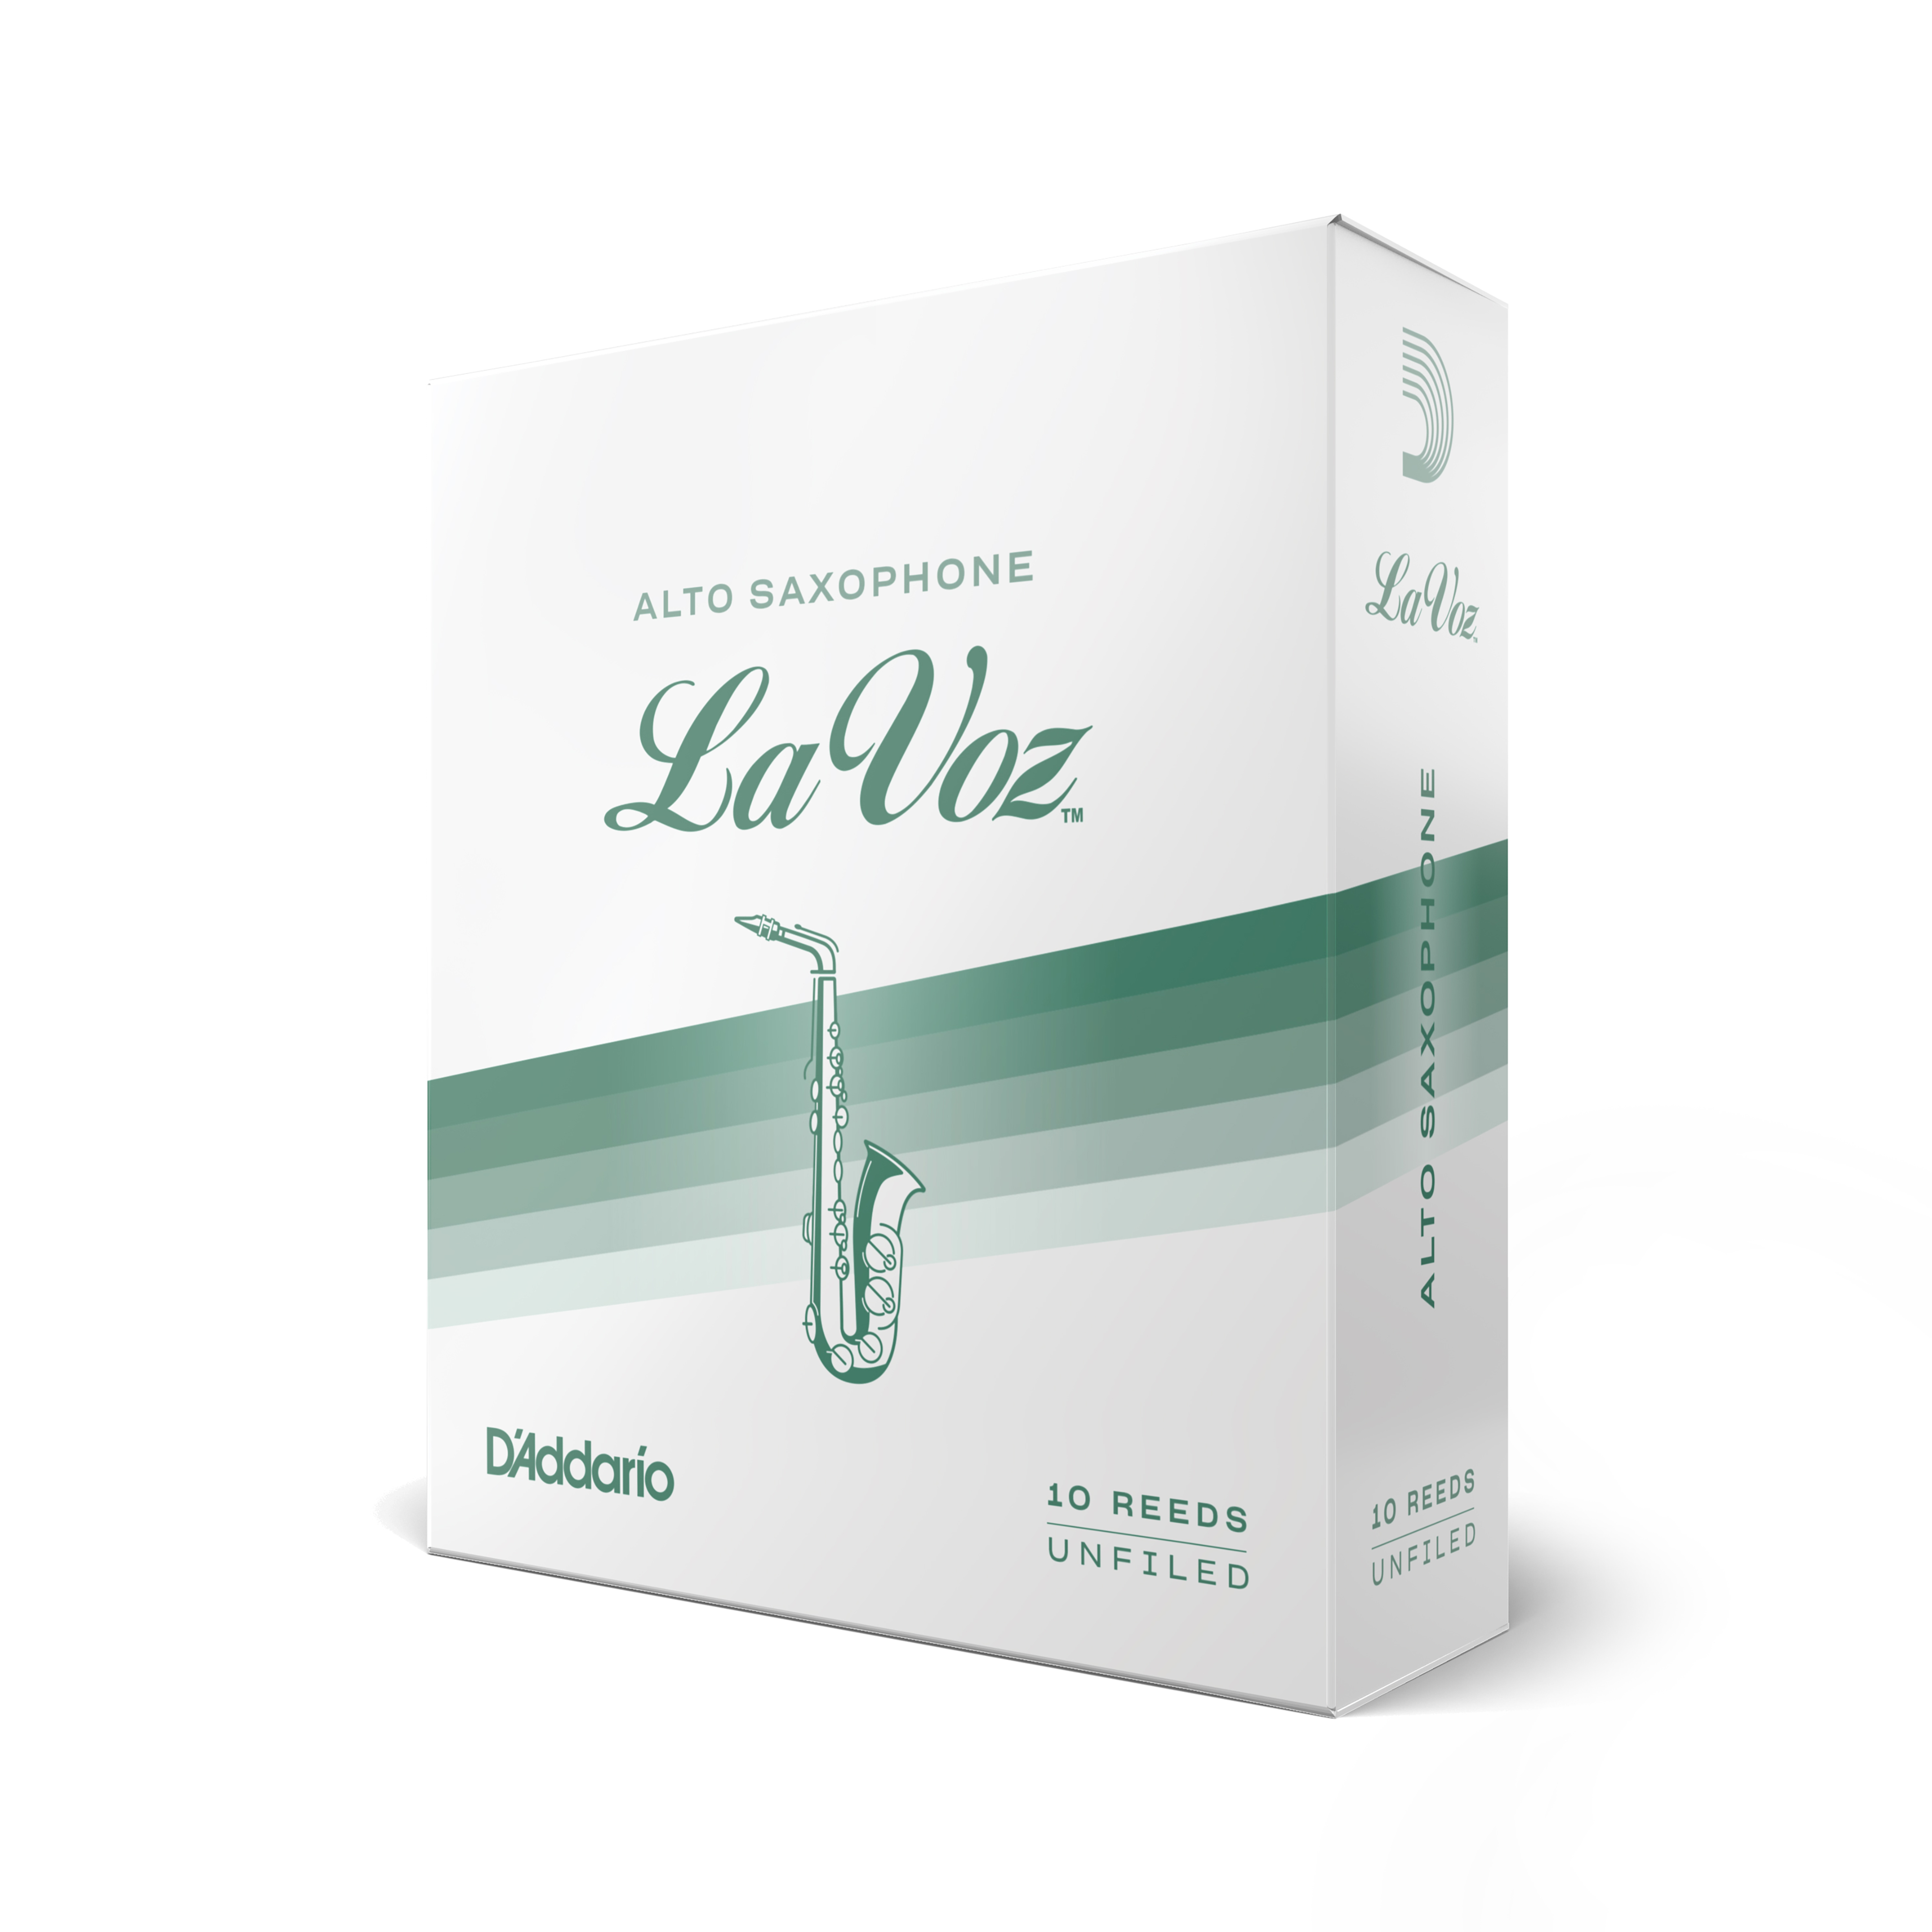 box of ten La Voz by D'addario alto saxophone reeds, medium strength